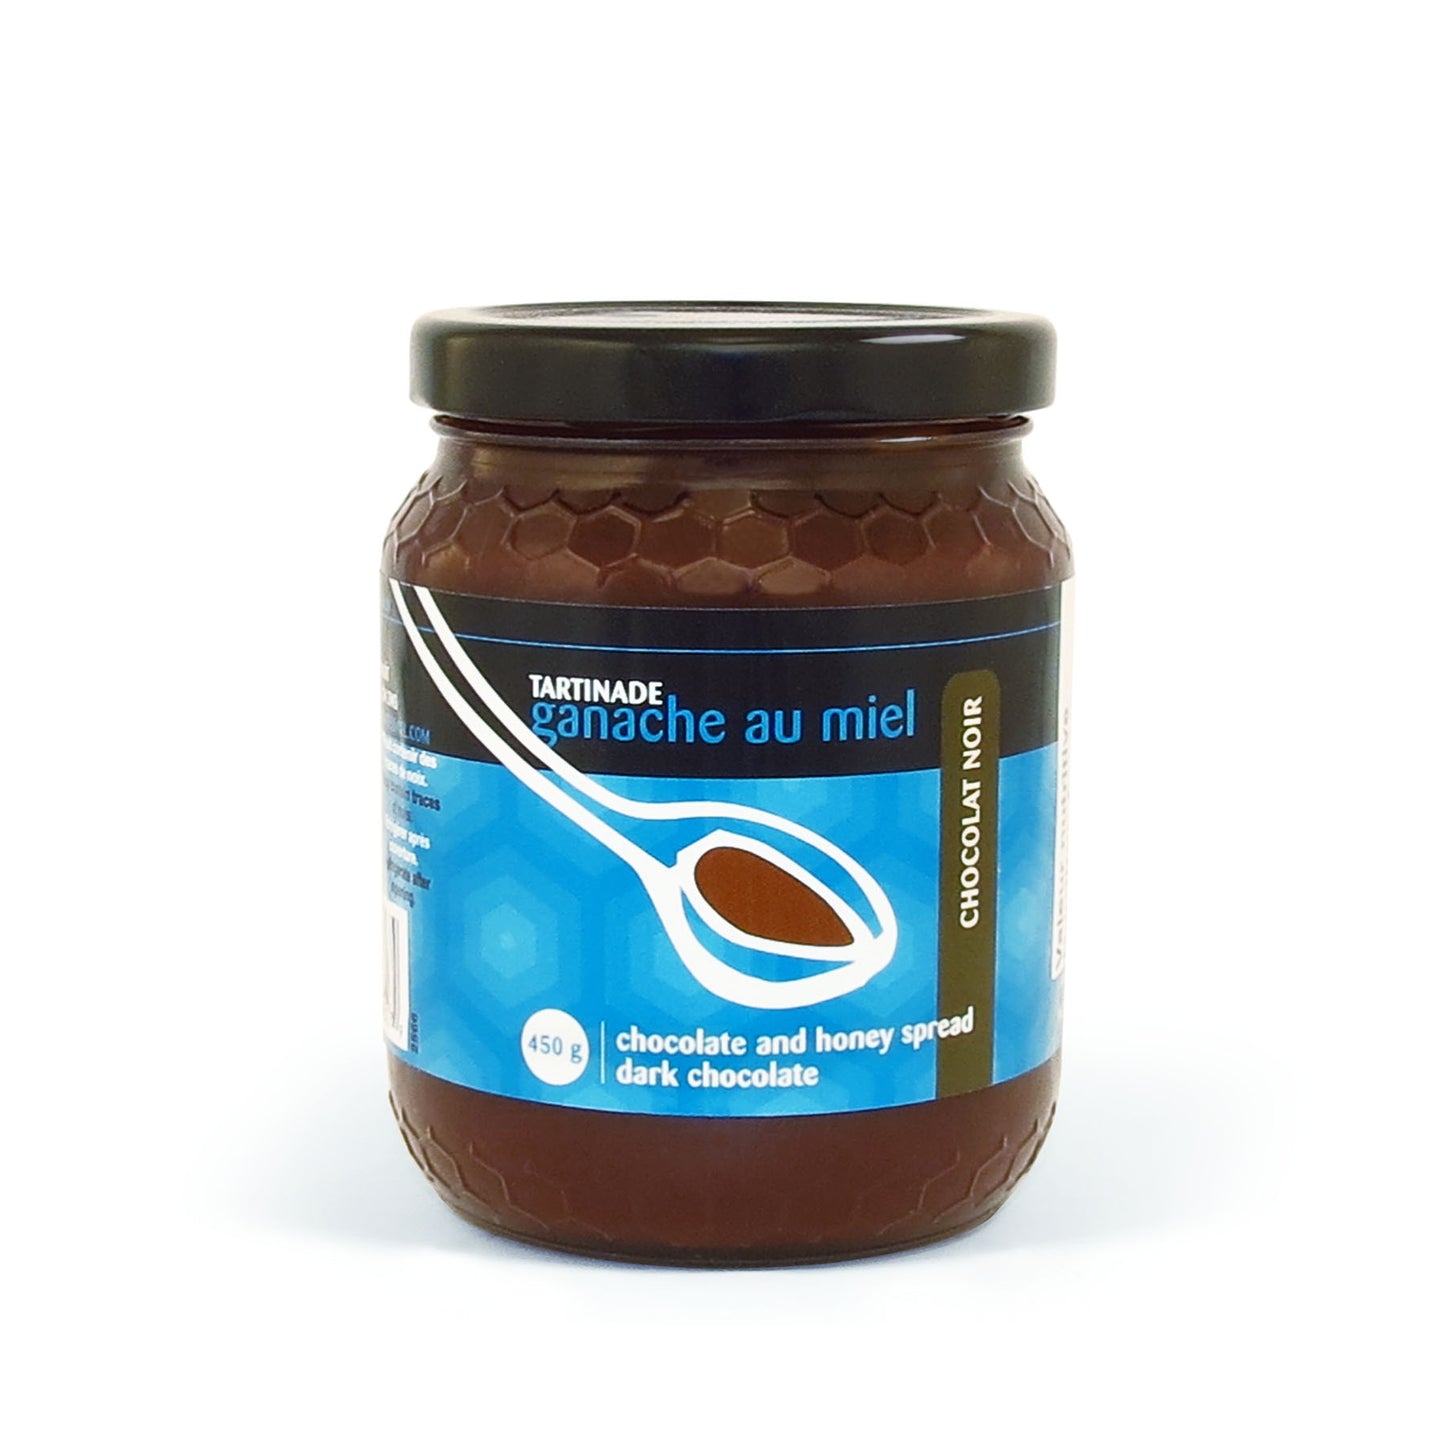 Jar of Chocolate and honey spread